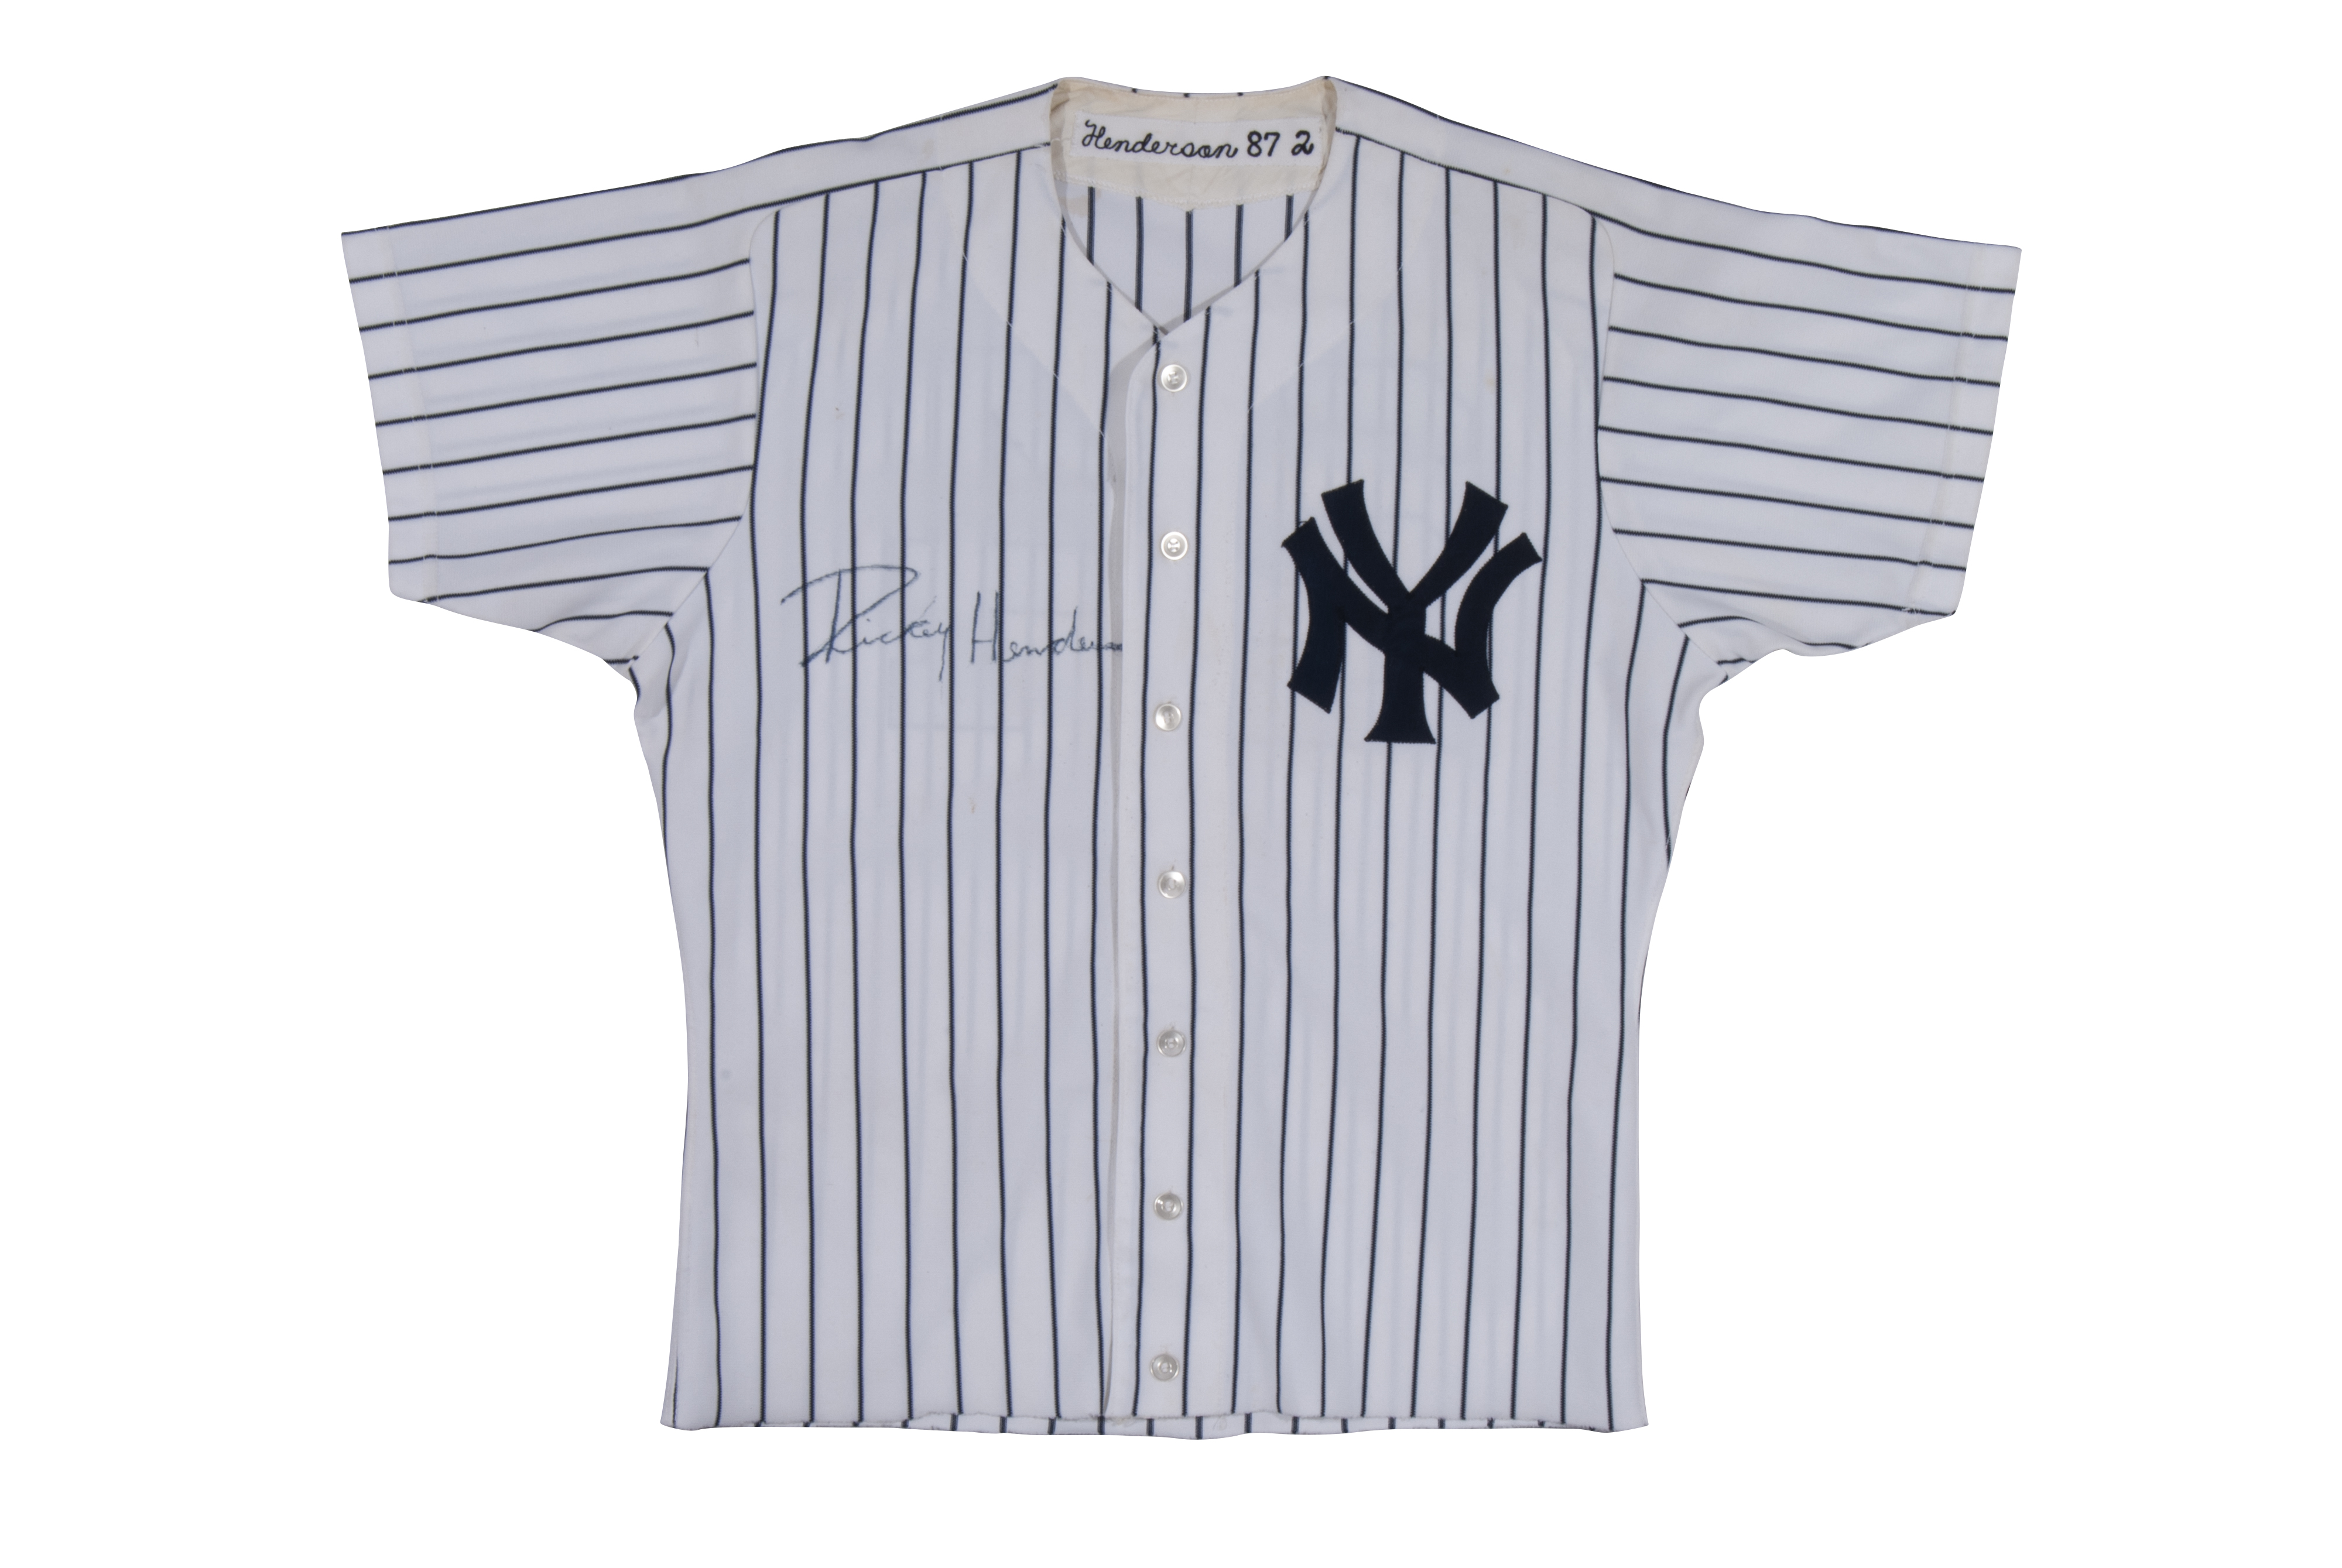 Rickey Henderson Autographed P/S New York Yankees Jersey- JSA W